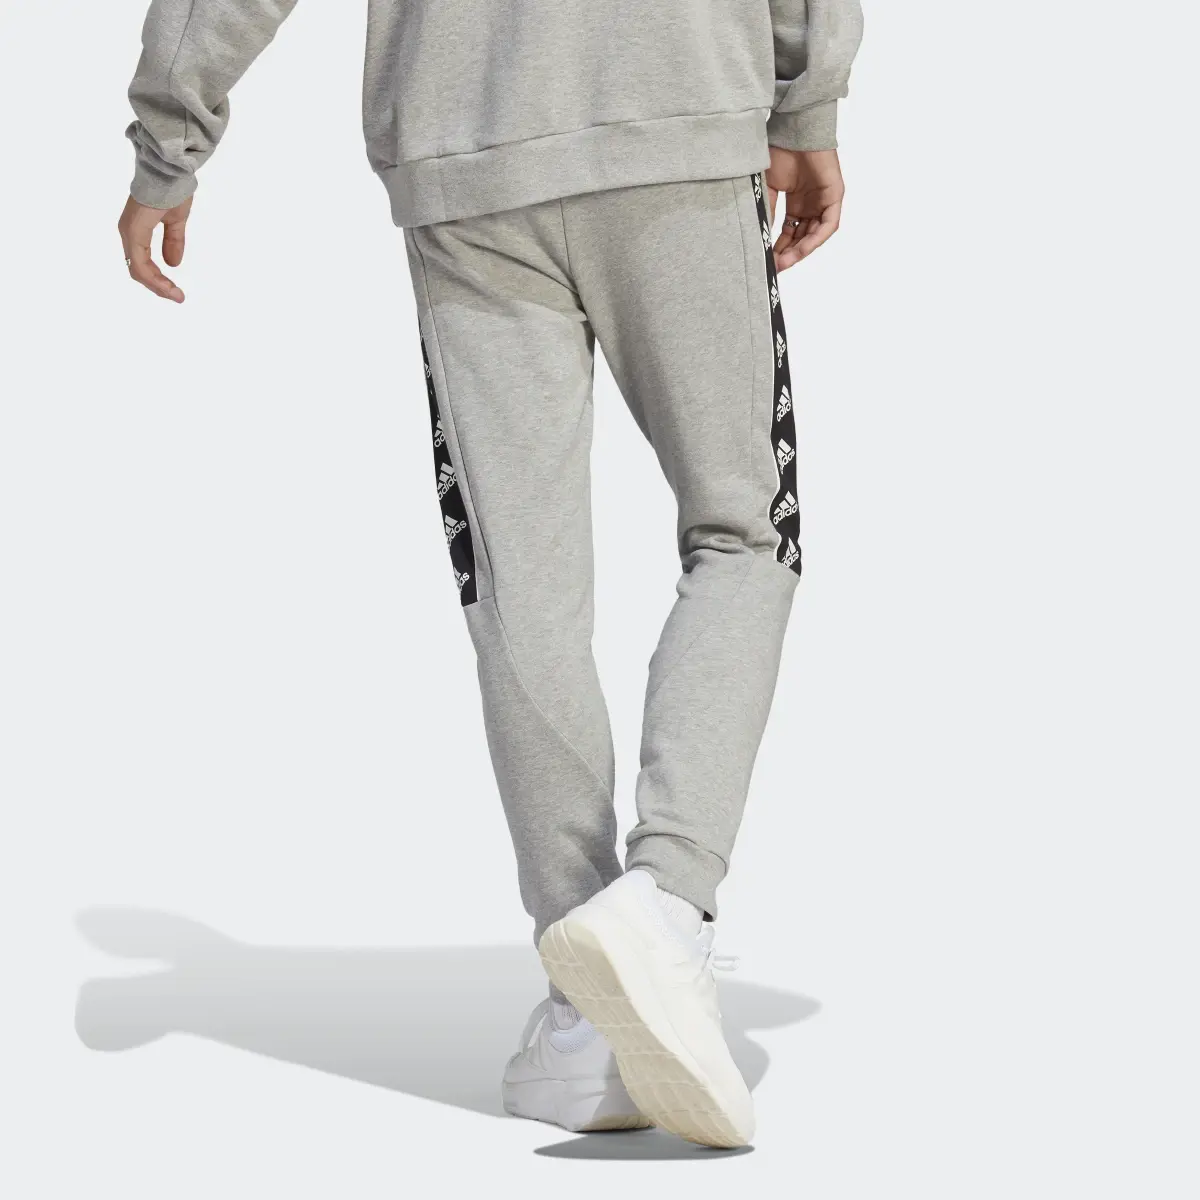 Adidas Brandlove Pants. 2